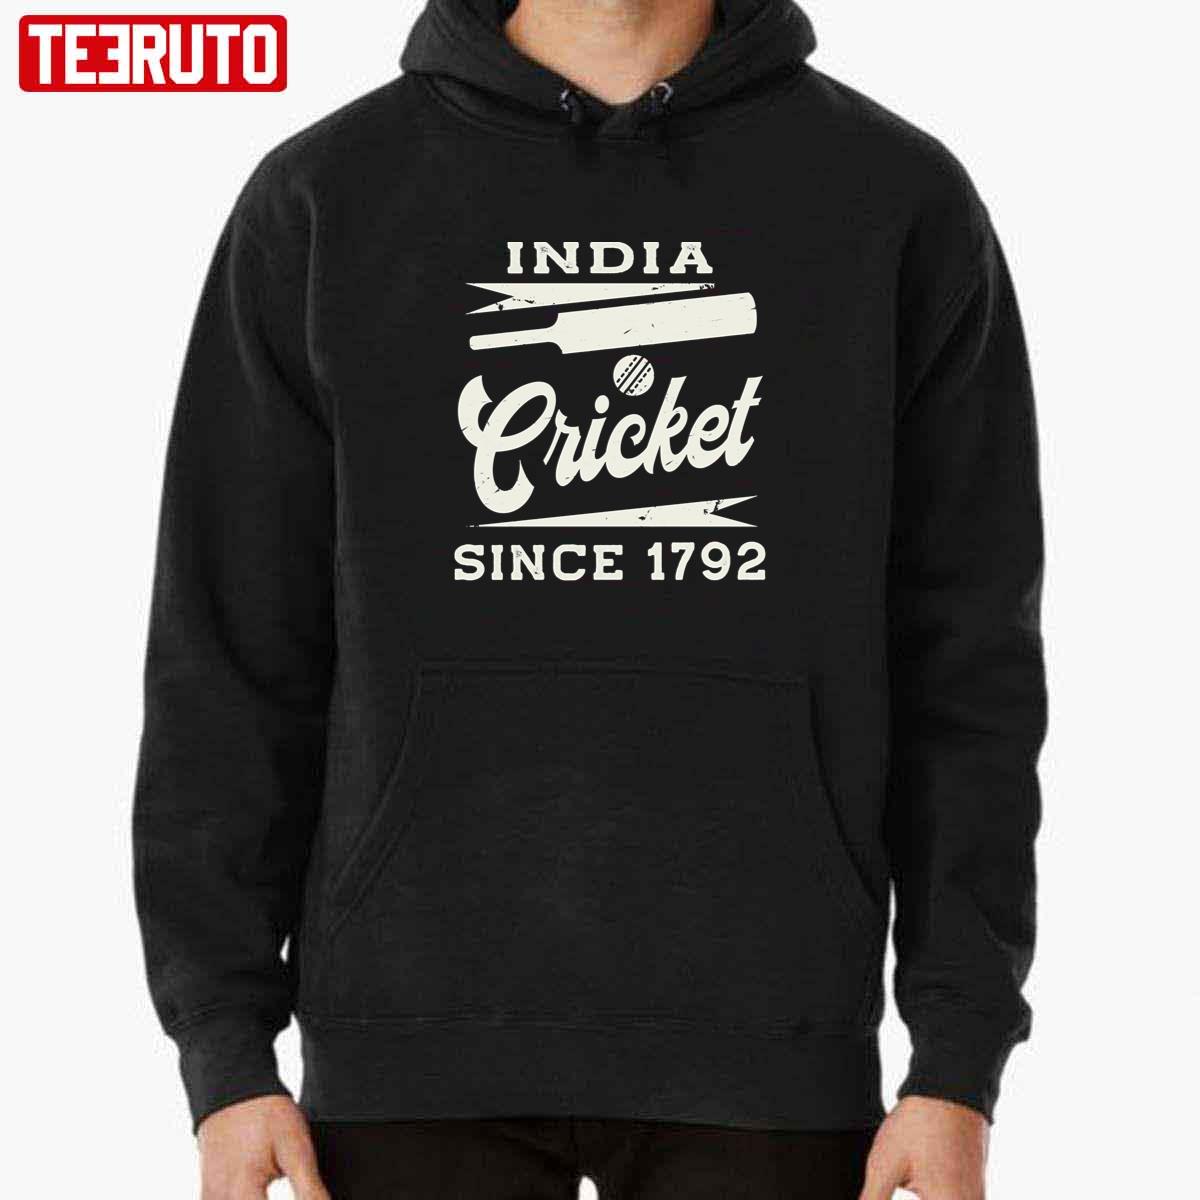 India Cricket Since 1792 Vintage Unisex Hoodie